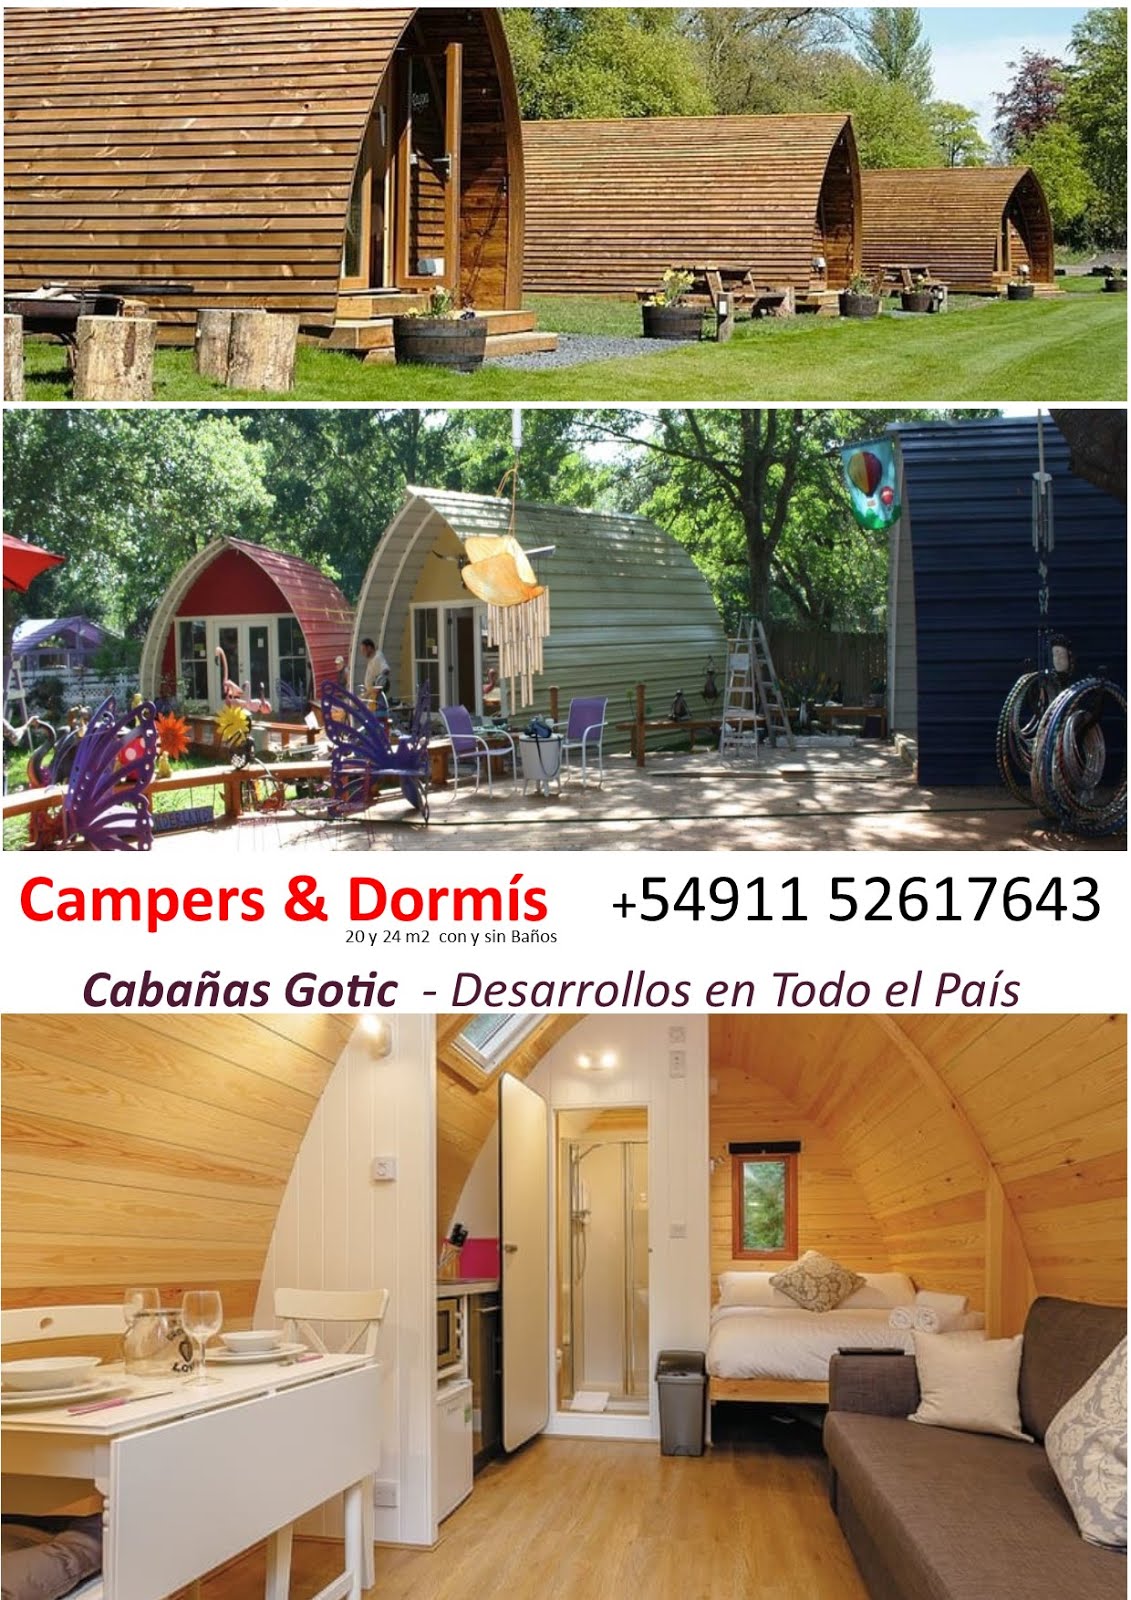 Campers & Dormis